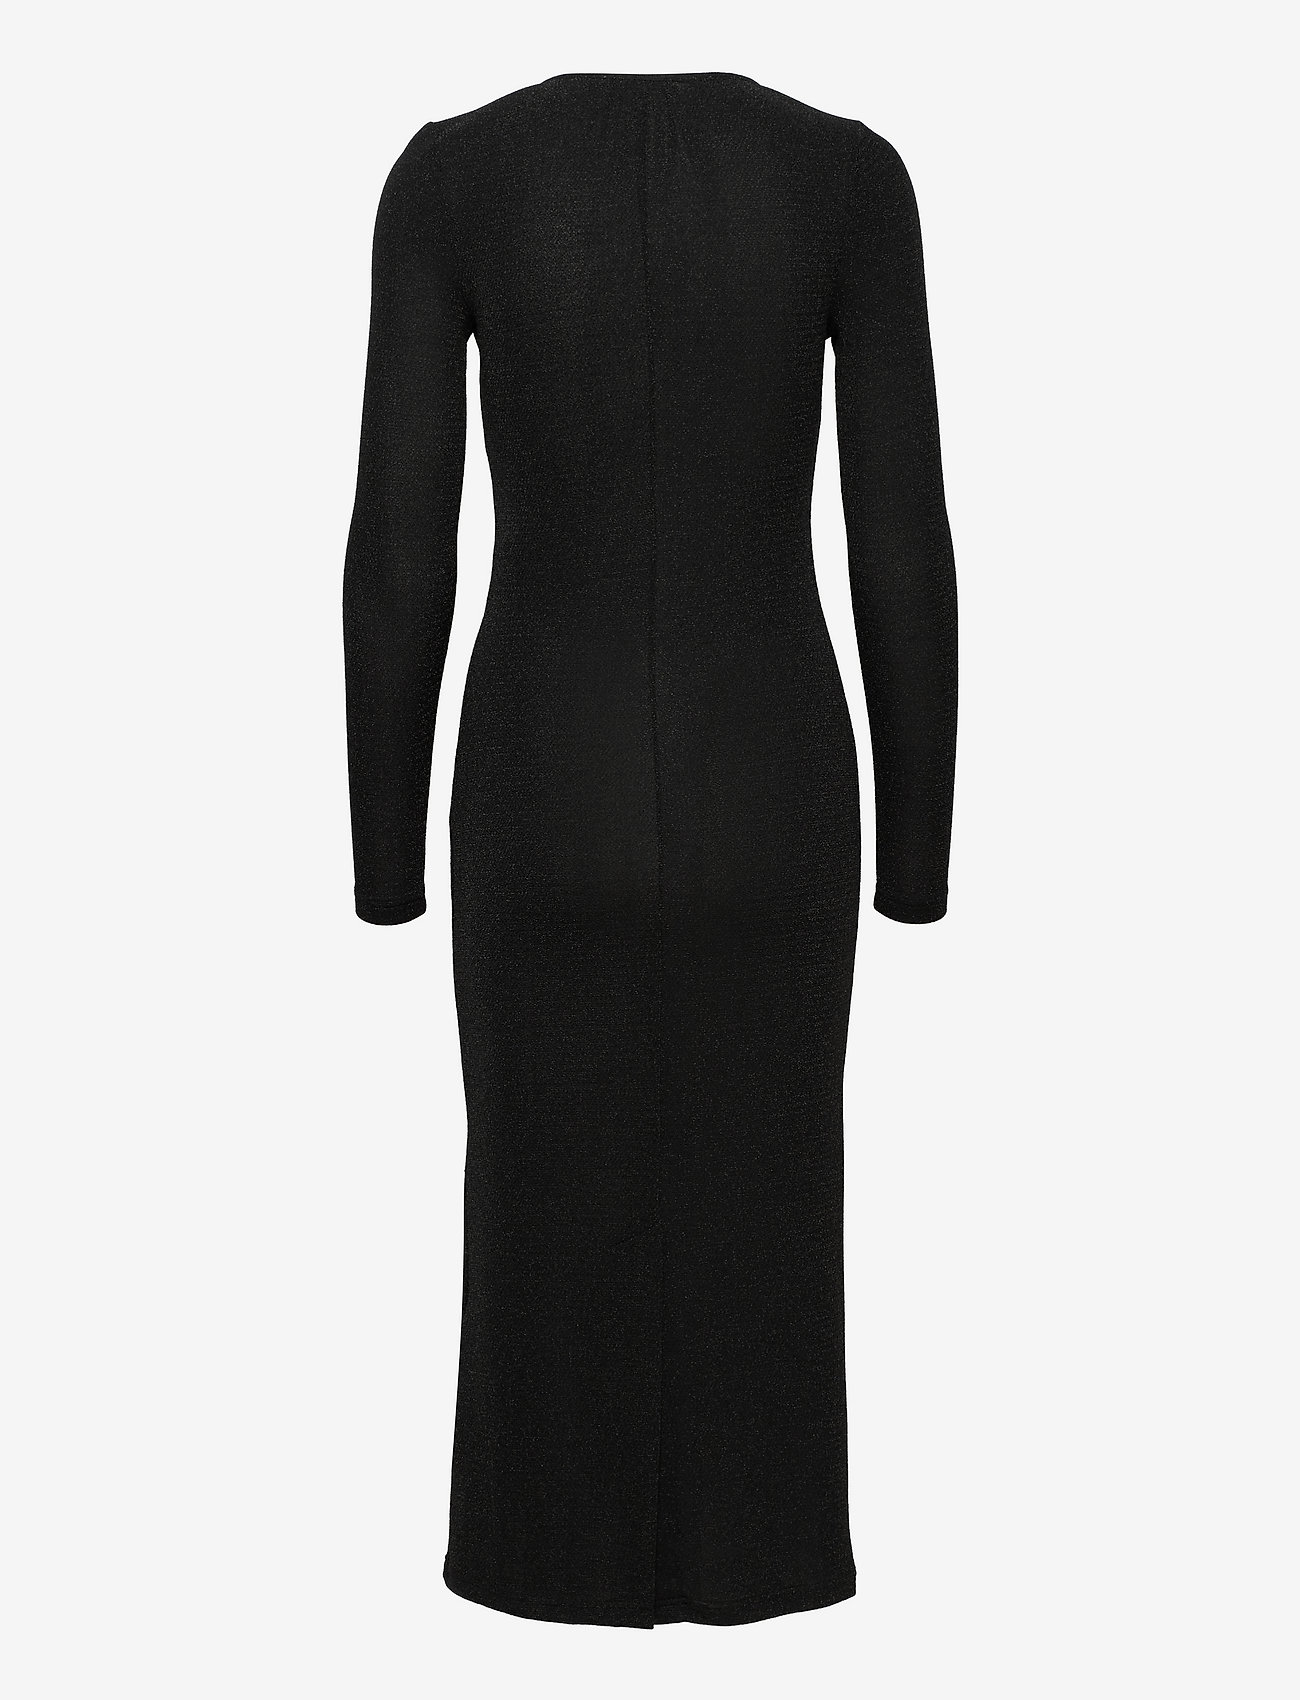 bzr - Luella Ida dress - stramme kjoler - black - 1